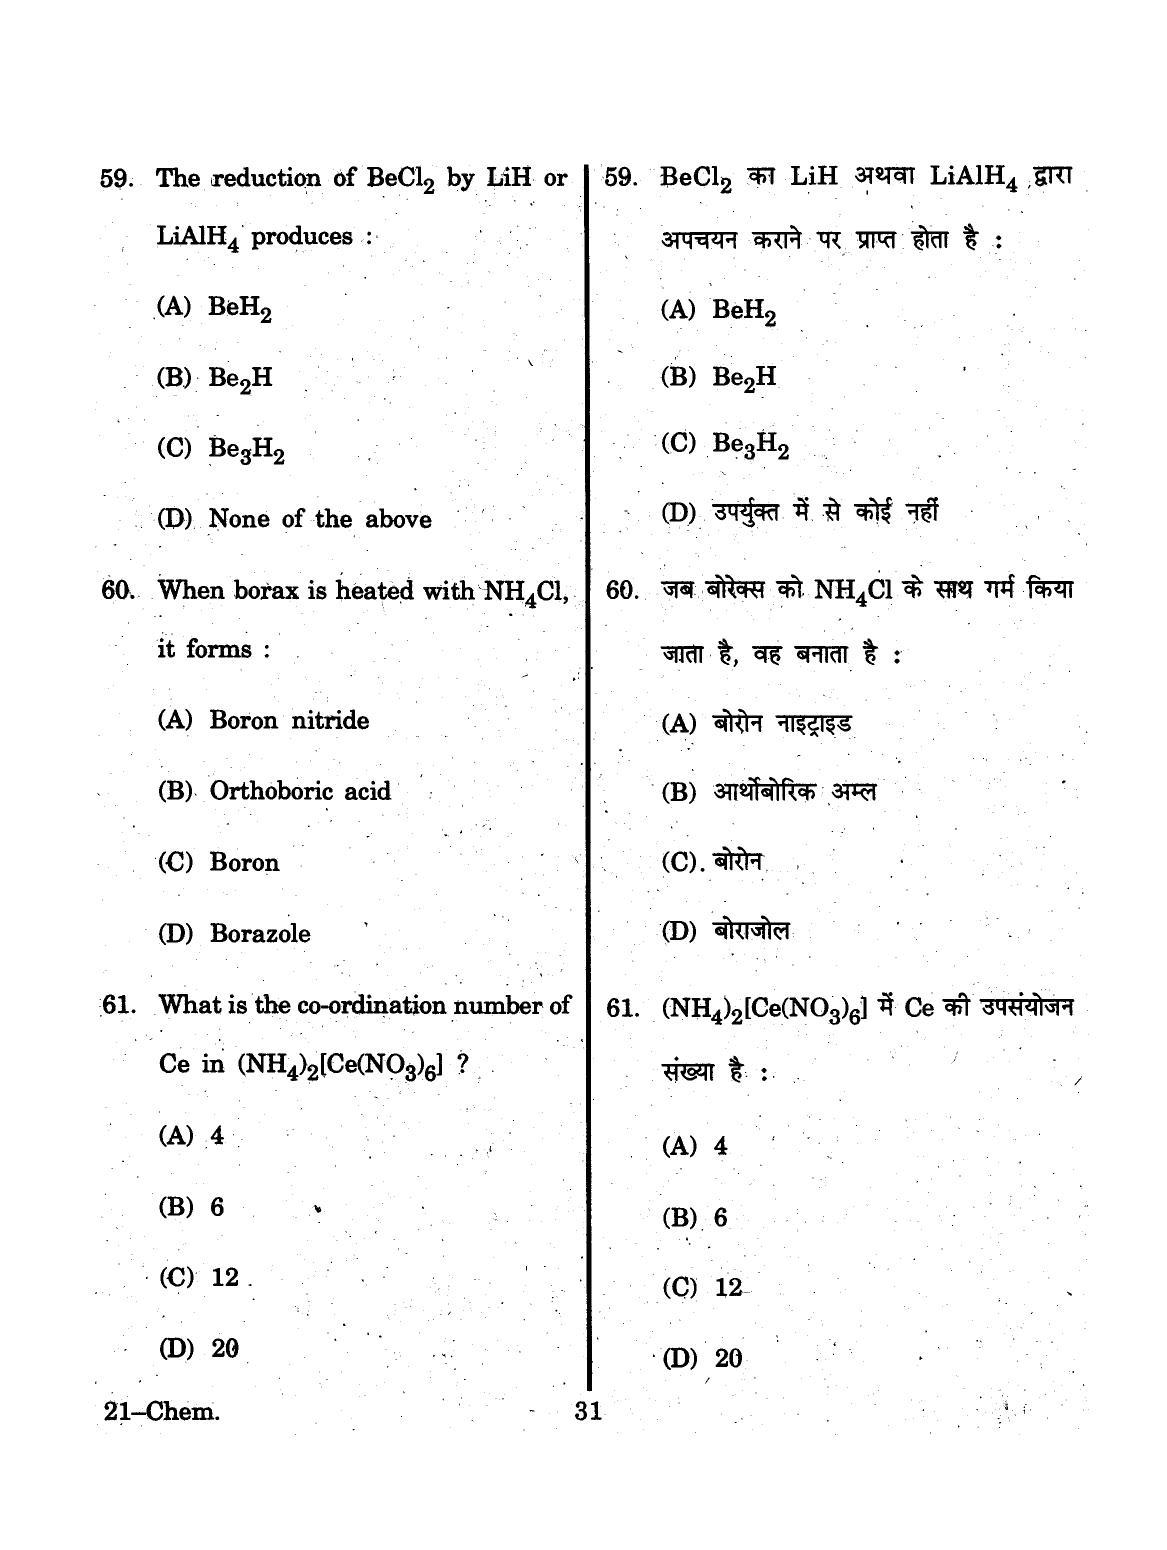 URATPG 2015 Chemisty Question Paper - Page 31